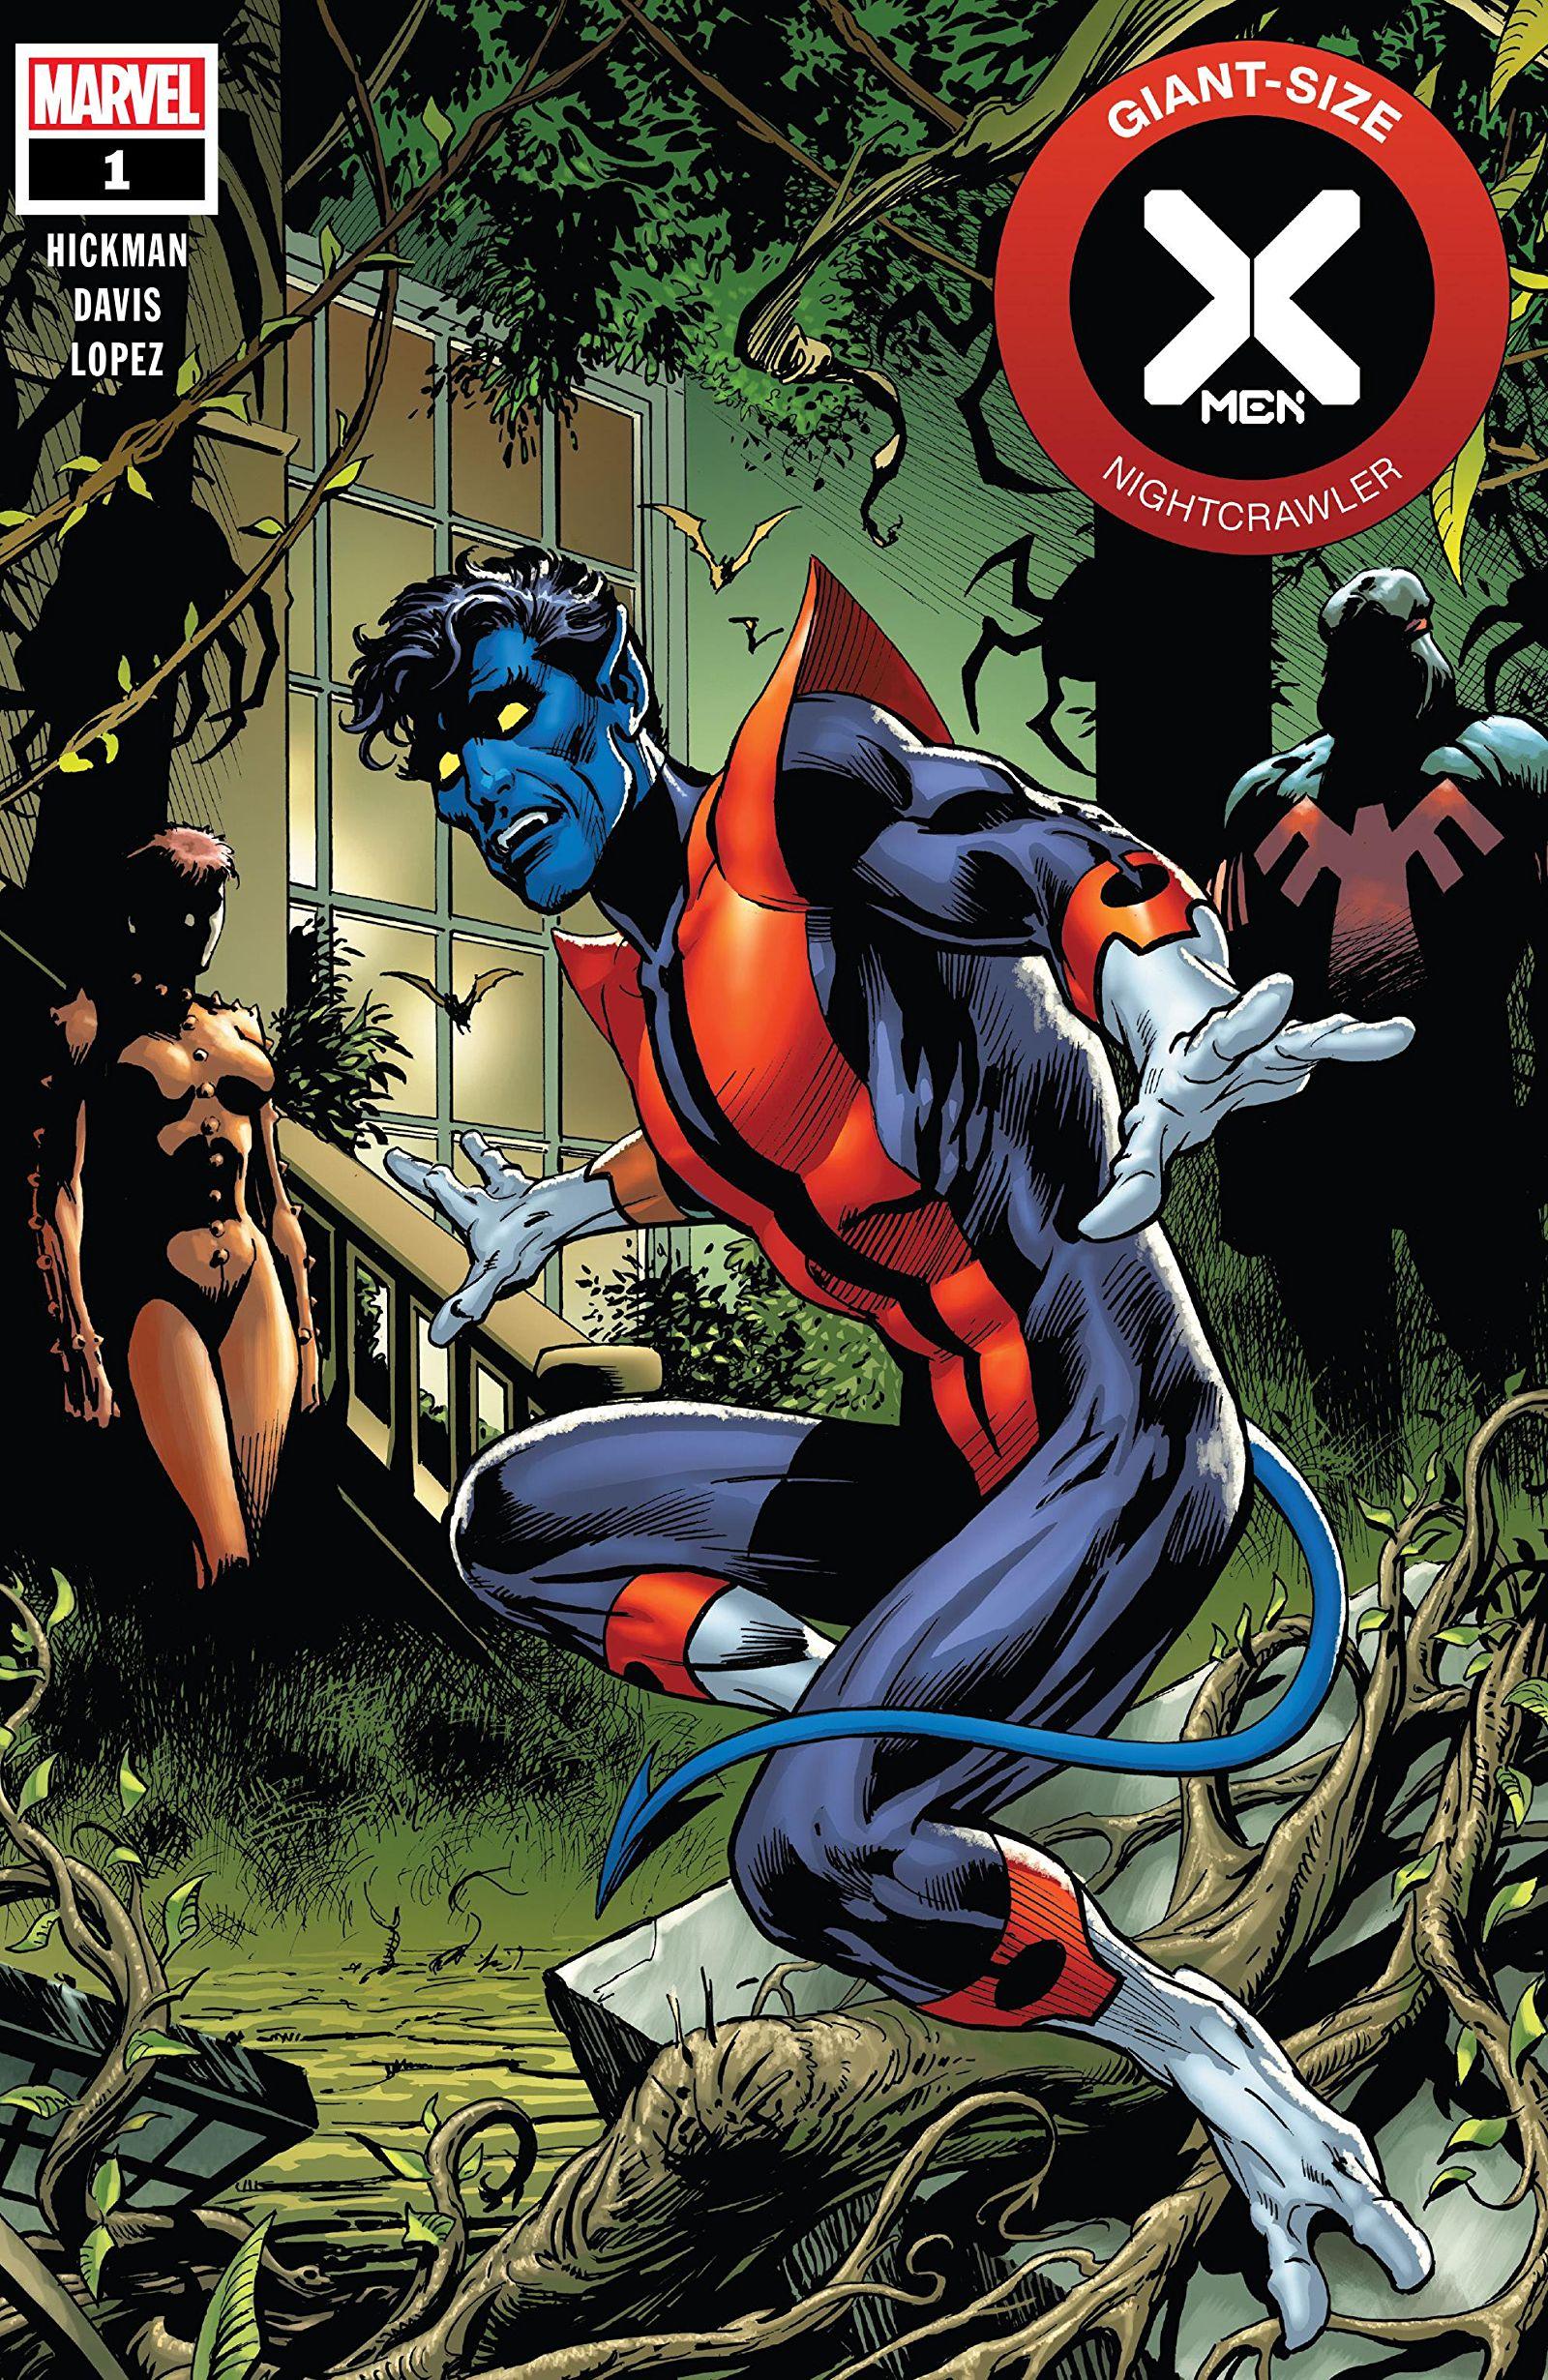 Giant-Size X-Men: Nightcrawler Vol. 1 #1